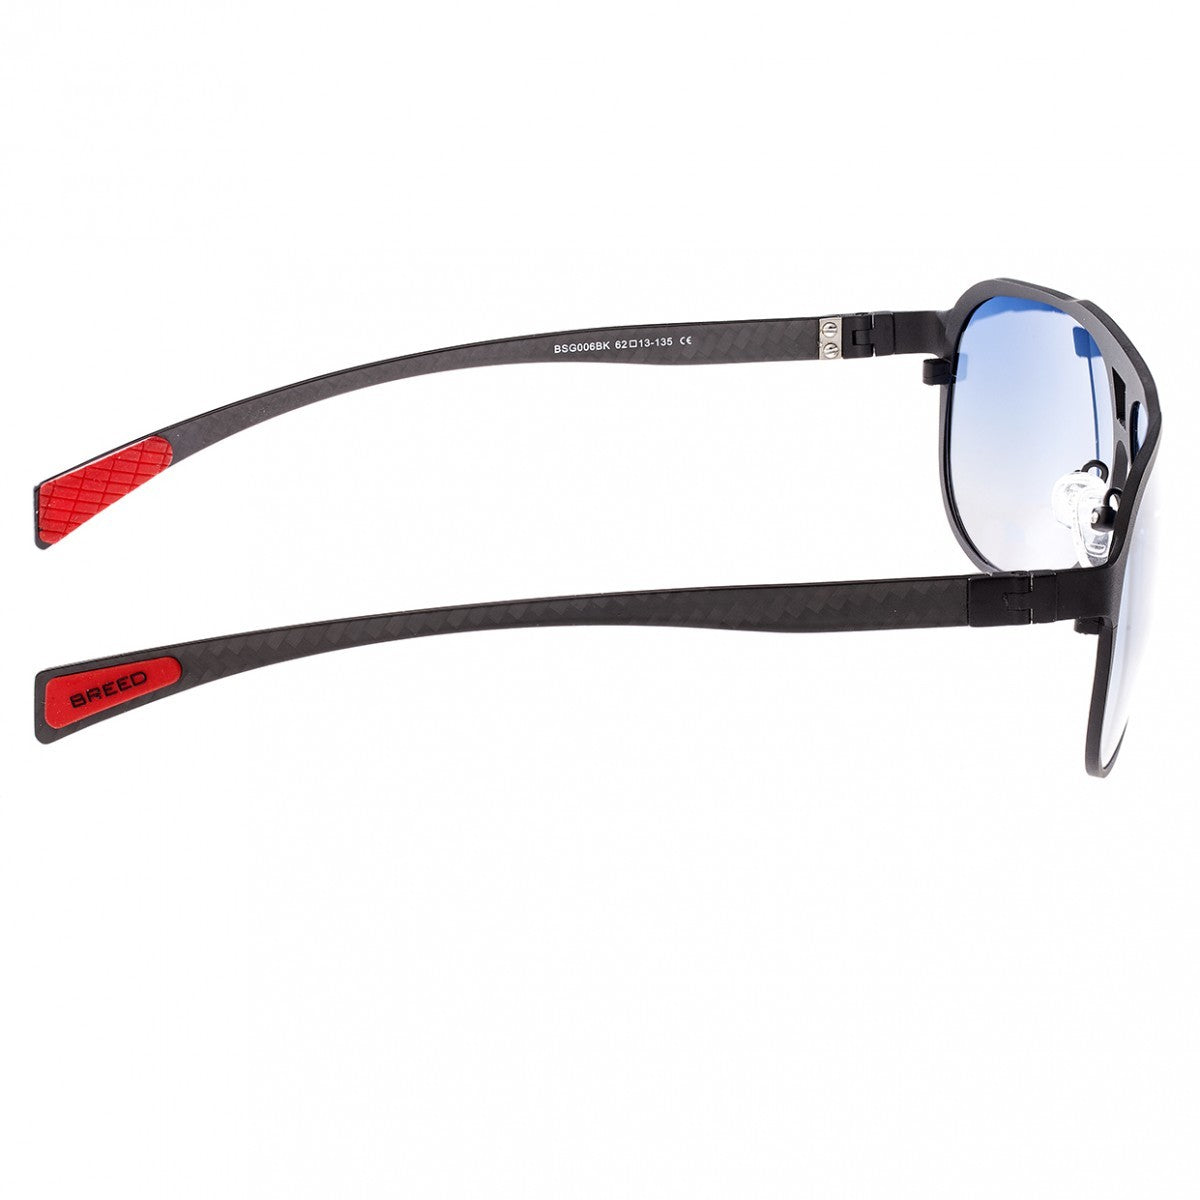 Breed Taurus Titanium and Carbon Fiber Polarized Sunglasses - Black/Blue - BSG005BK